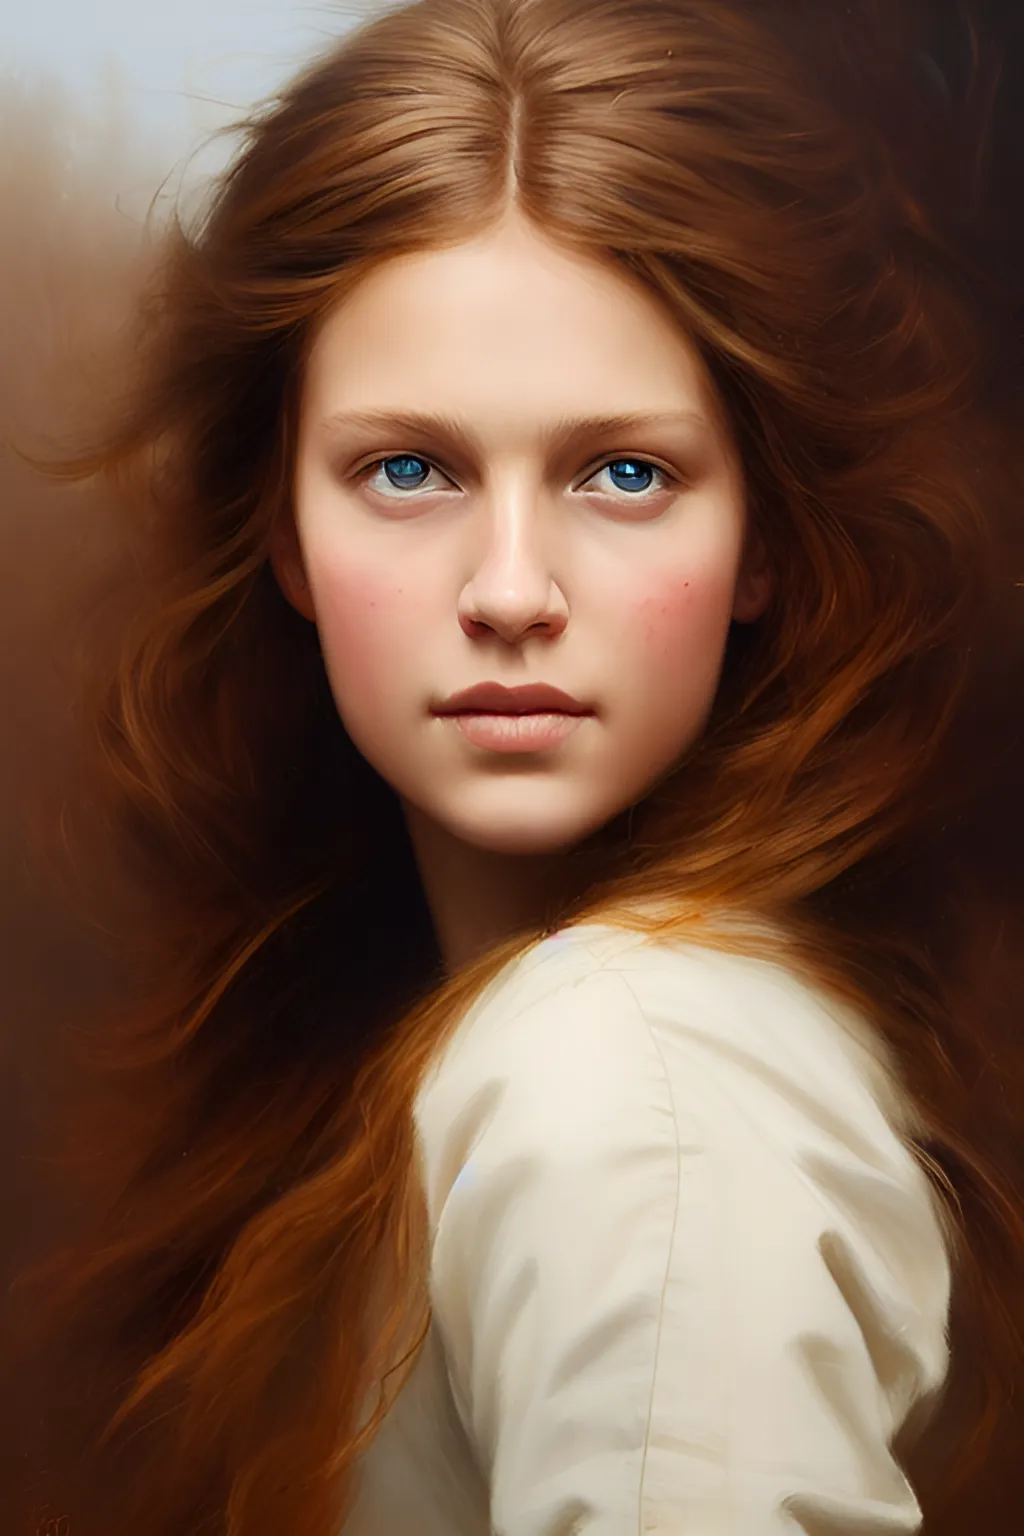 4k ultra high definition, 12K resolution,realistic photo,an Swedish beautiful girl,brown hair